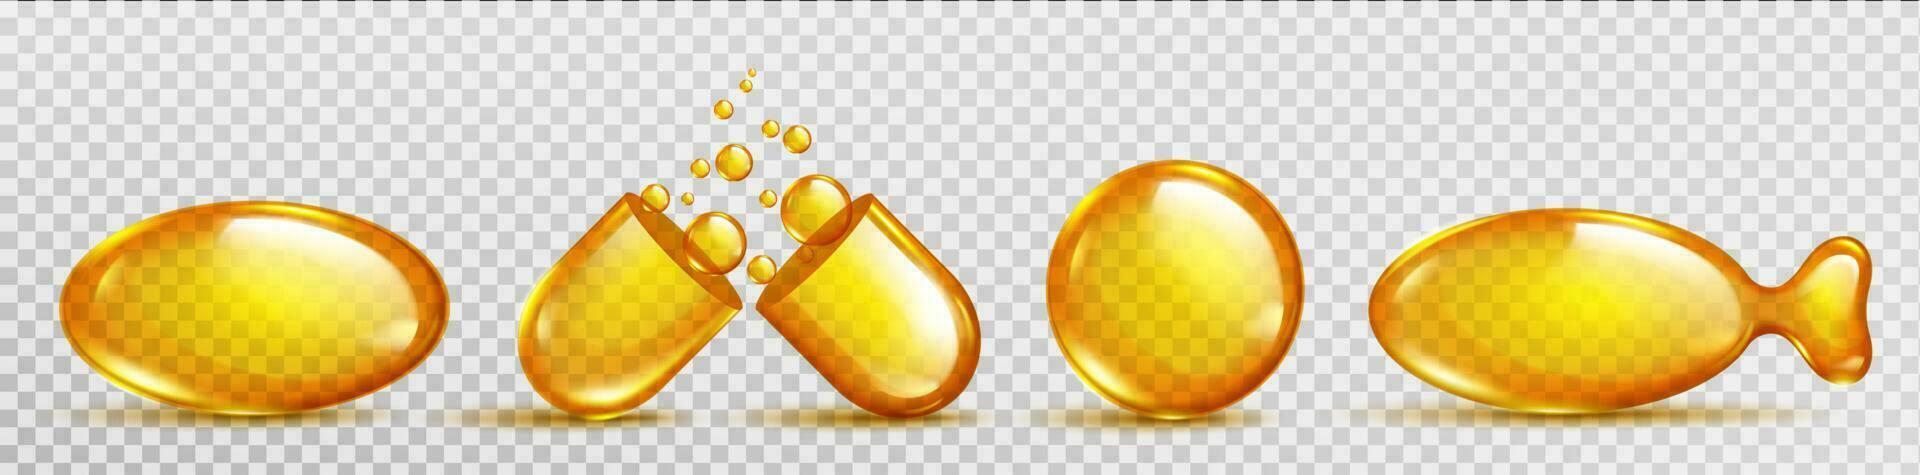 3d isolated oil vitamin pill fish capsule icon vector